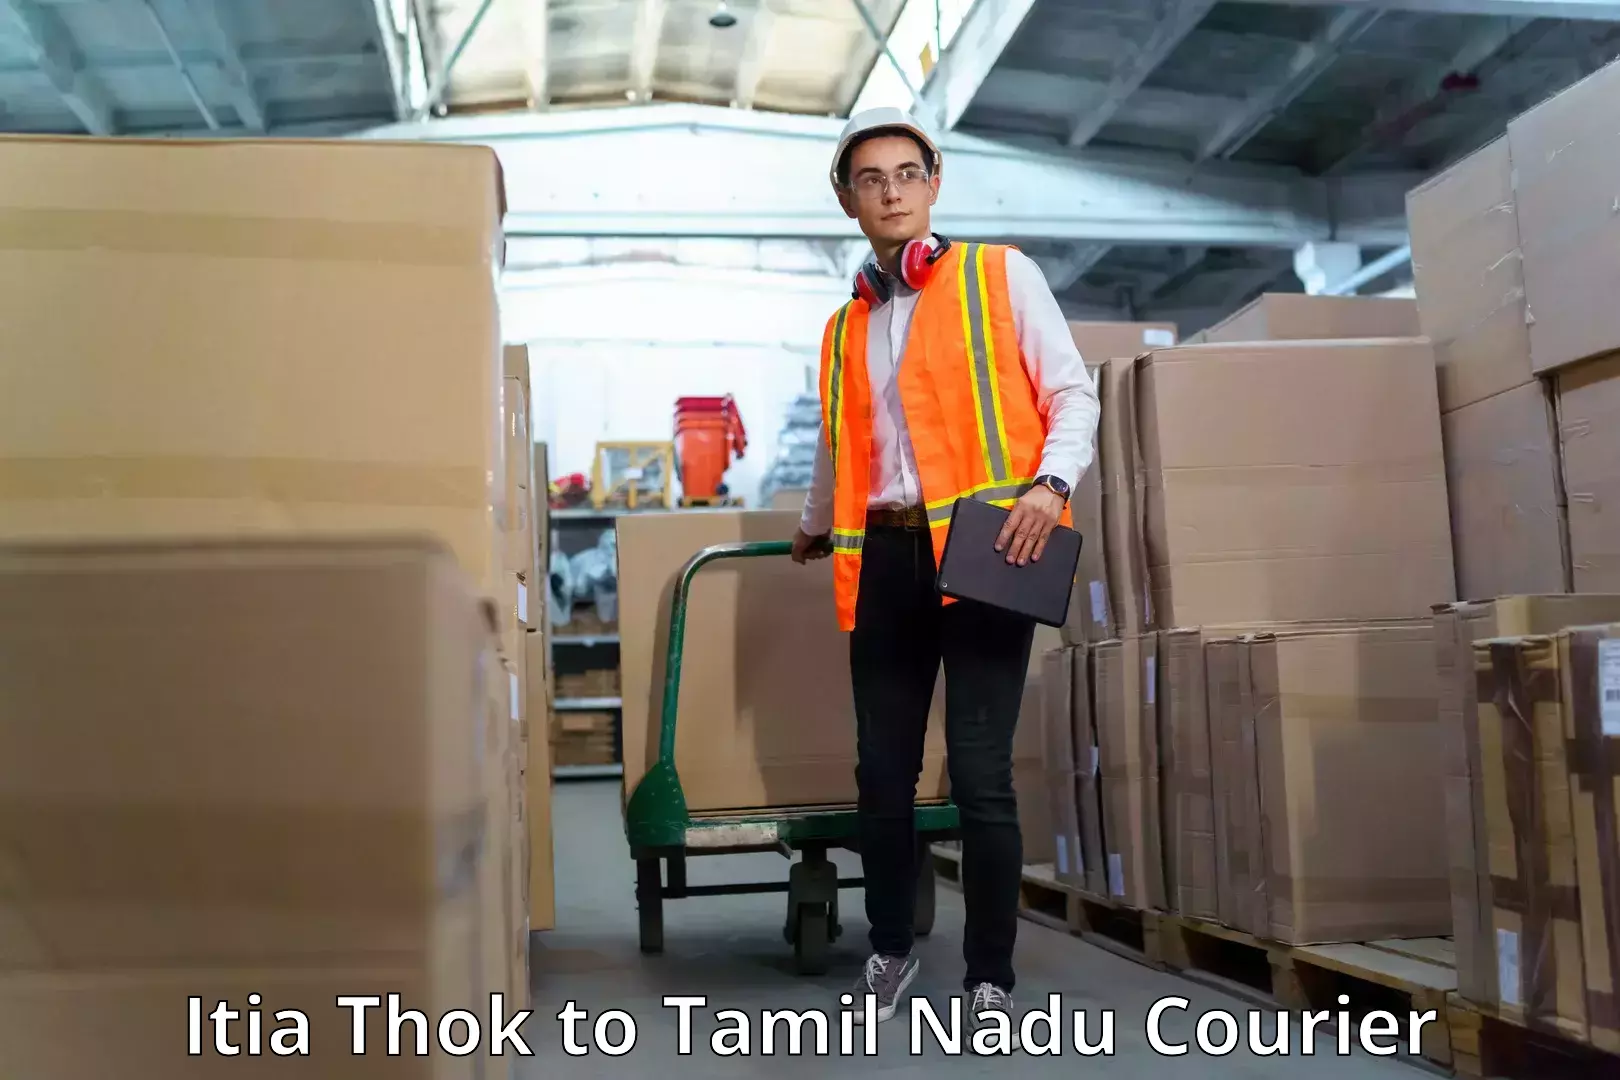 Courier service comparison Itia Thok to Tamil Nadu